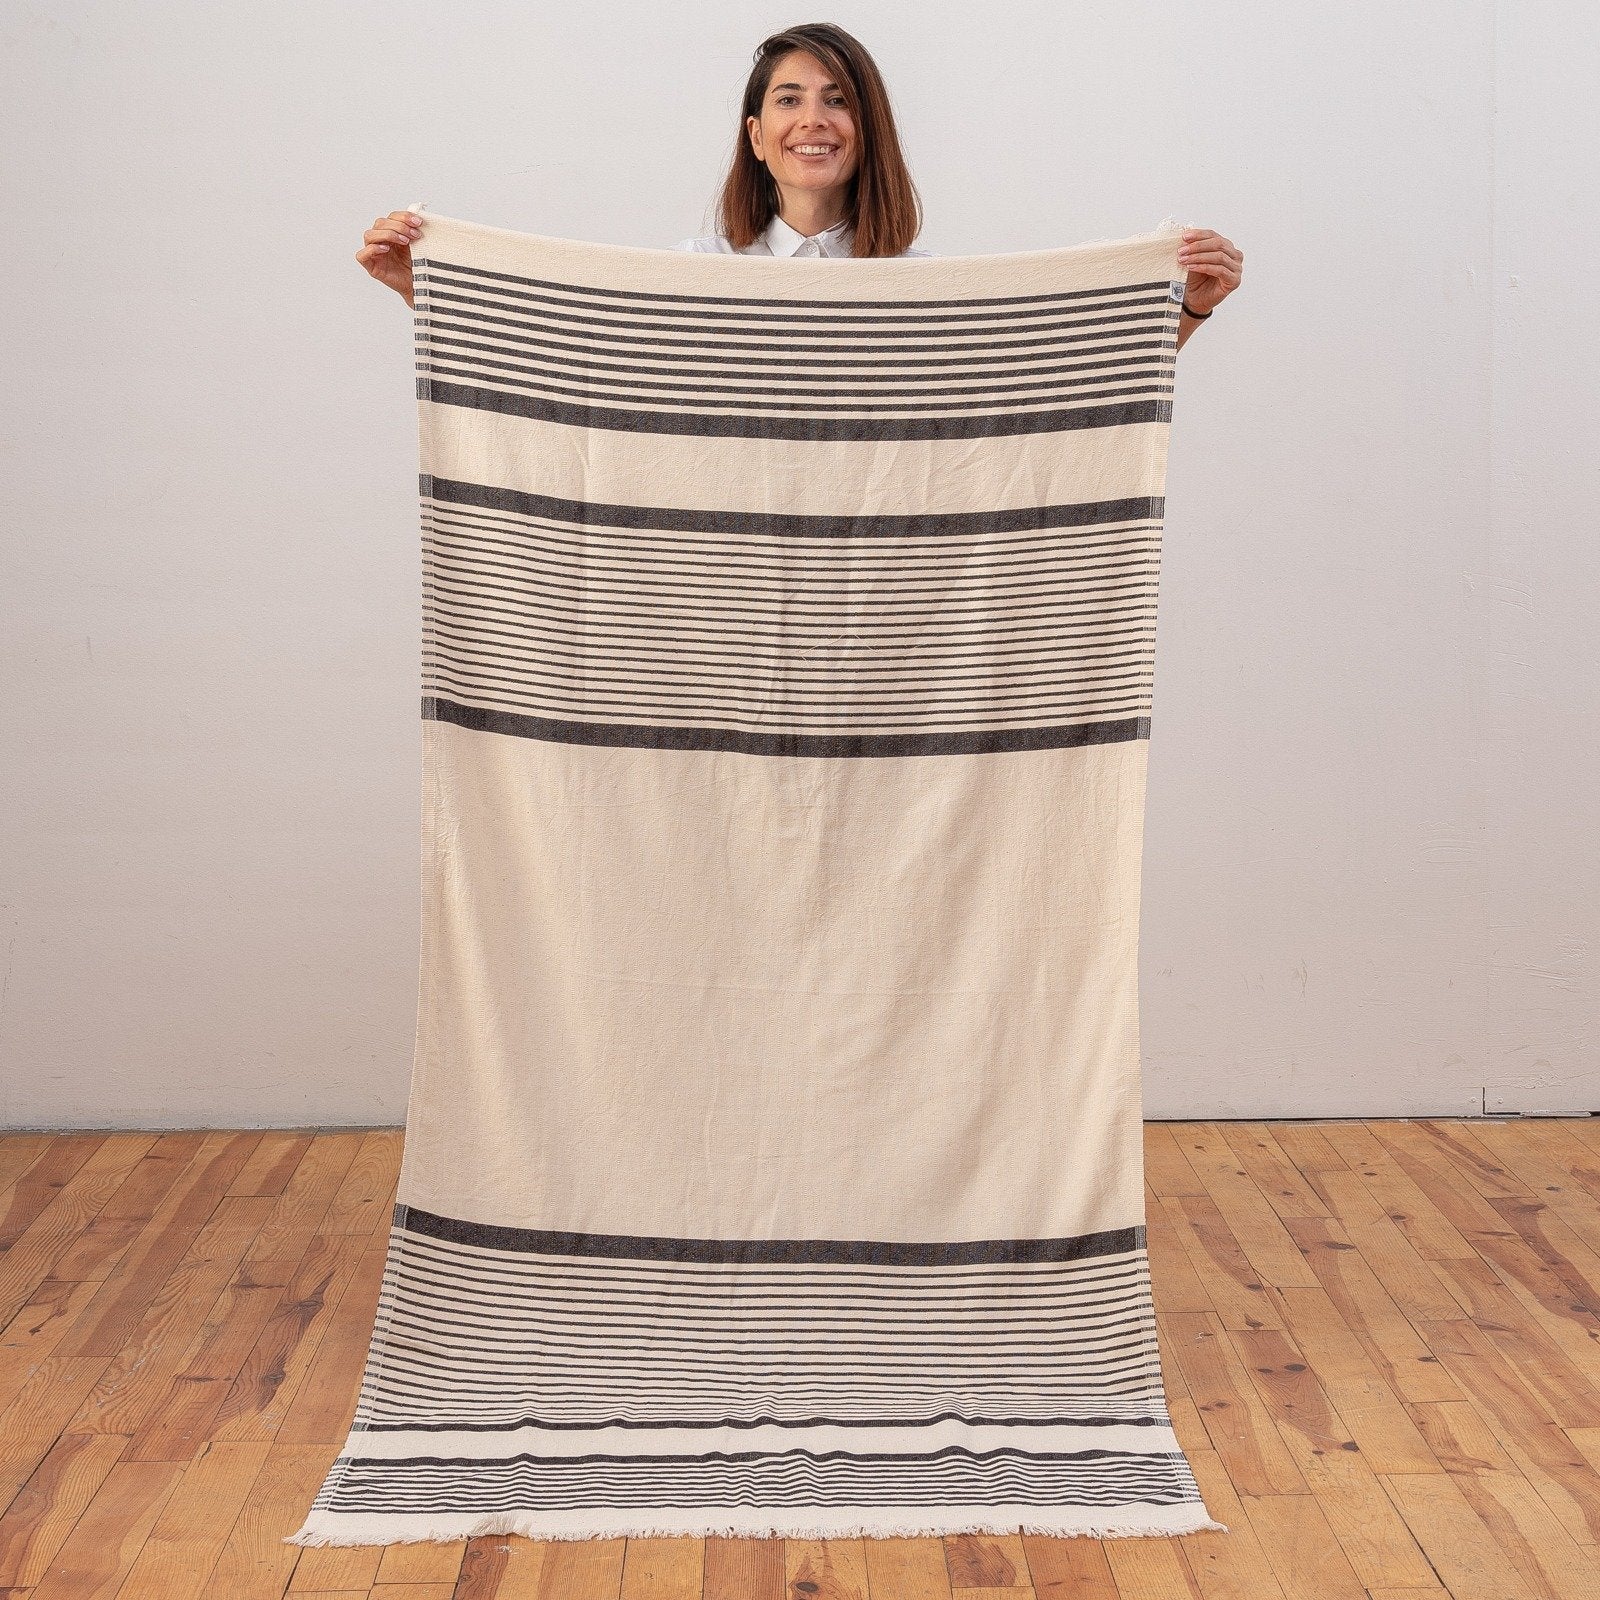 Andrea Turkish Towel No:3 - The Loomia